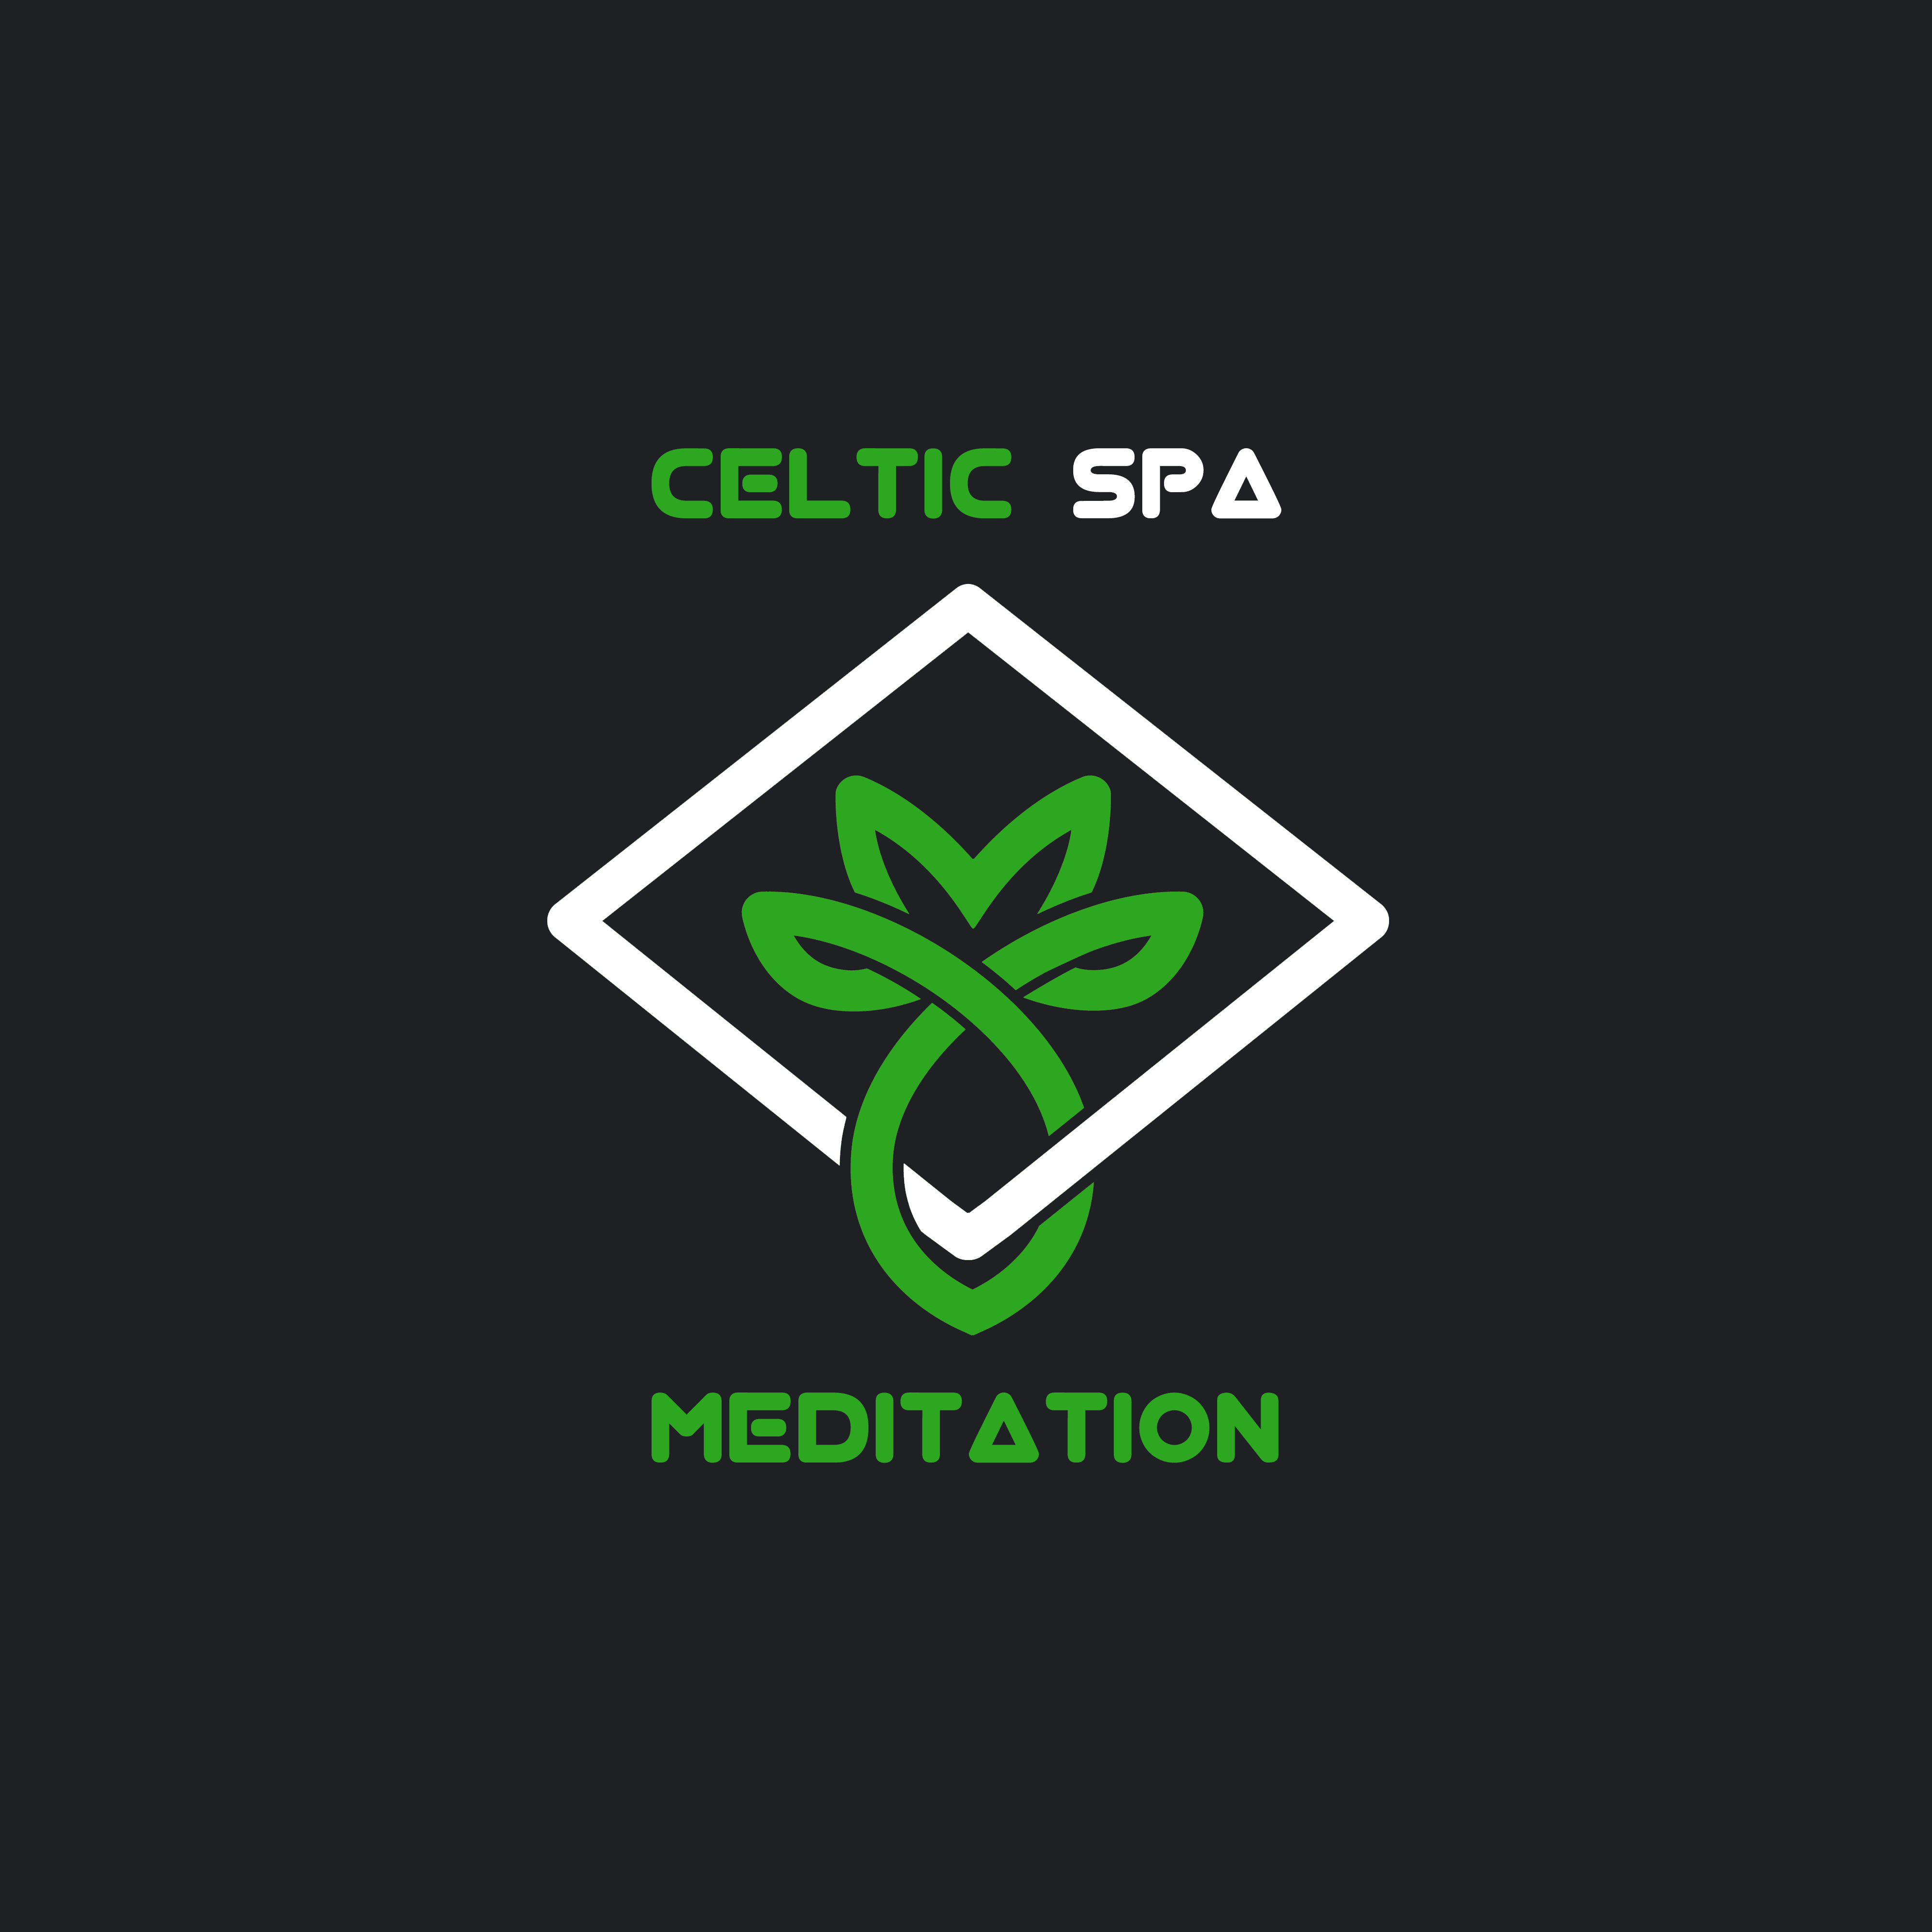 Celtic Spa Meditation